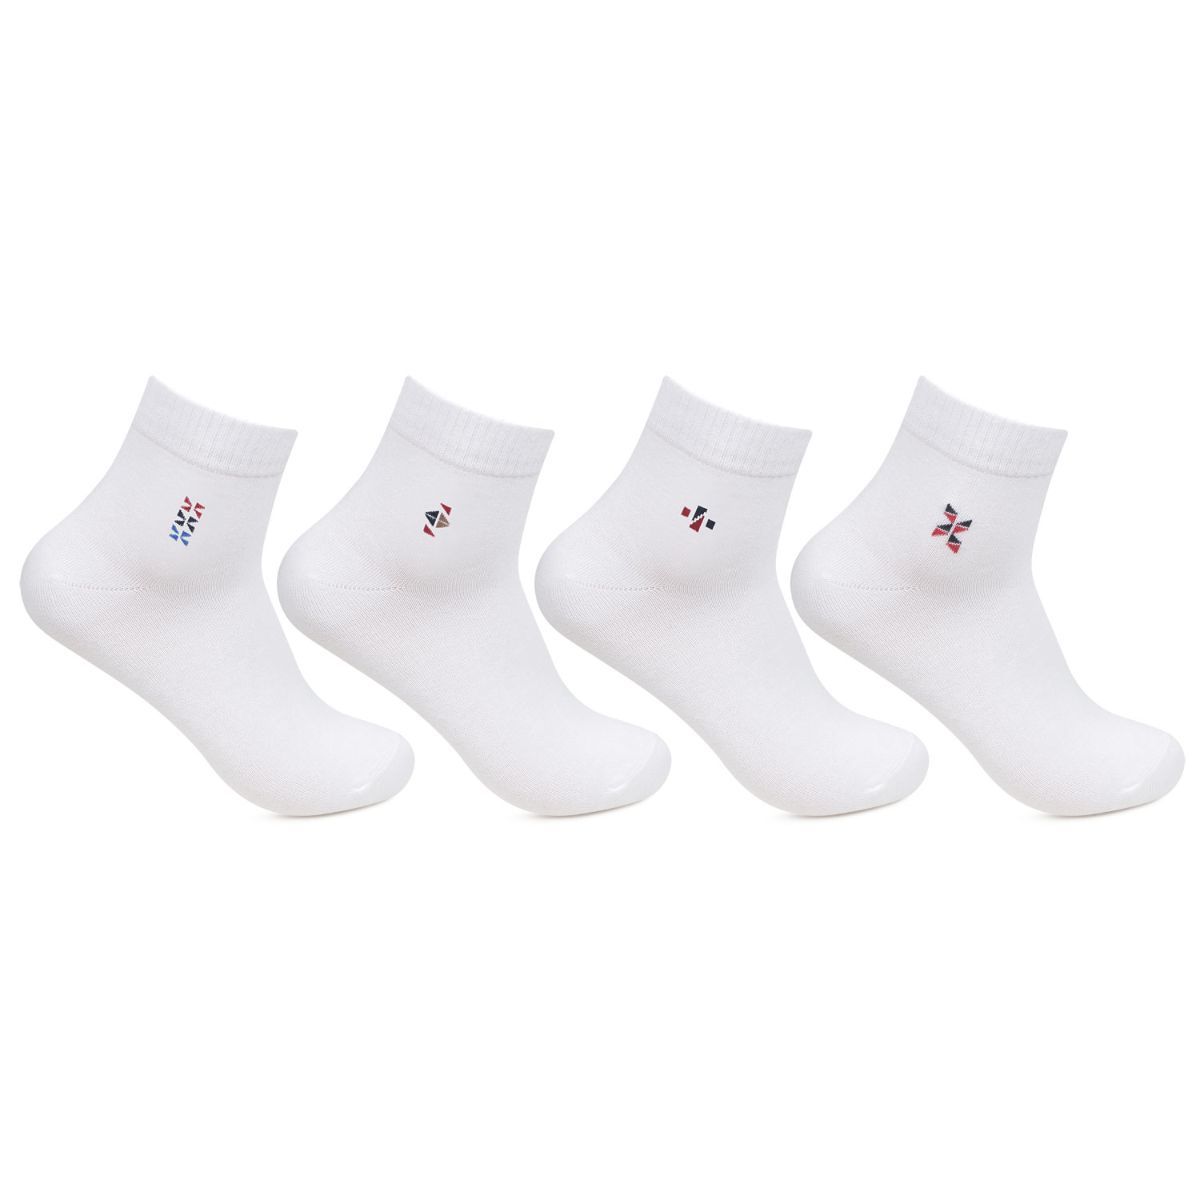 Bonjour Men's Cotton Centre Motif Socks, Pack Of 4 - White (Free size)